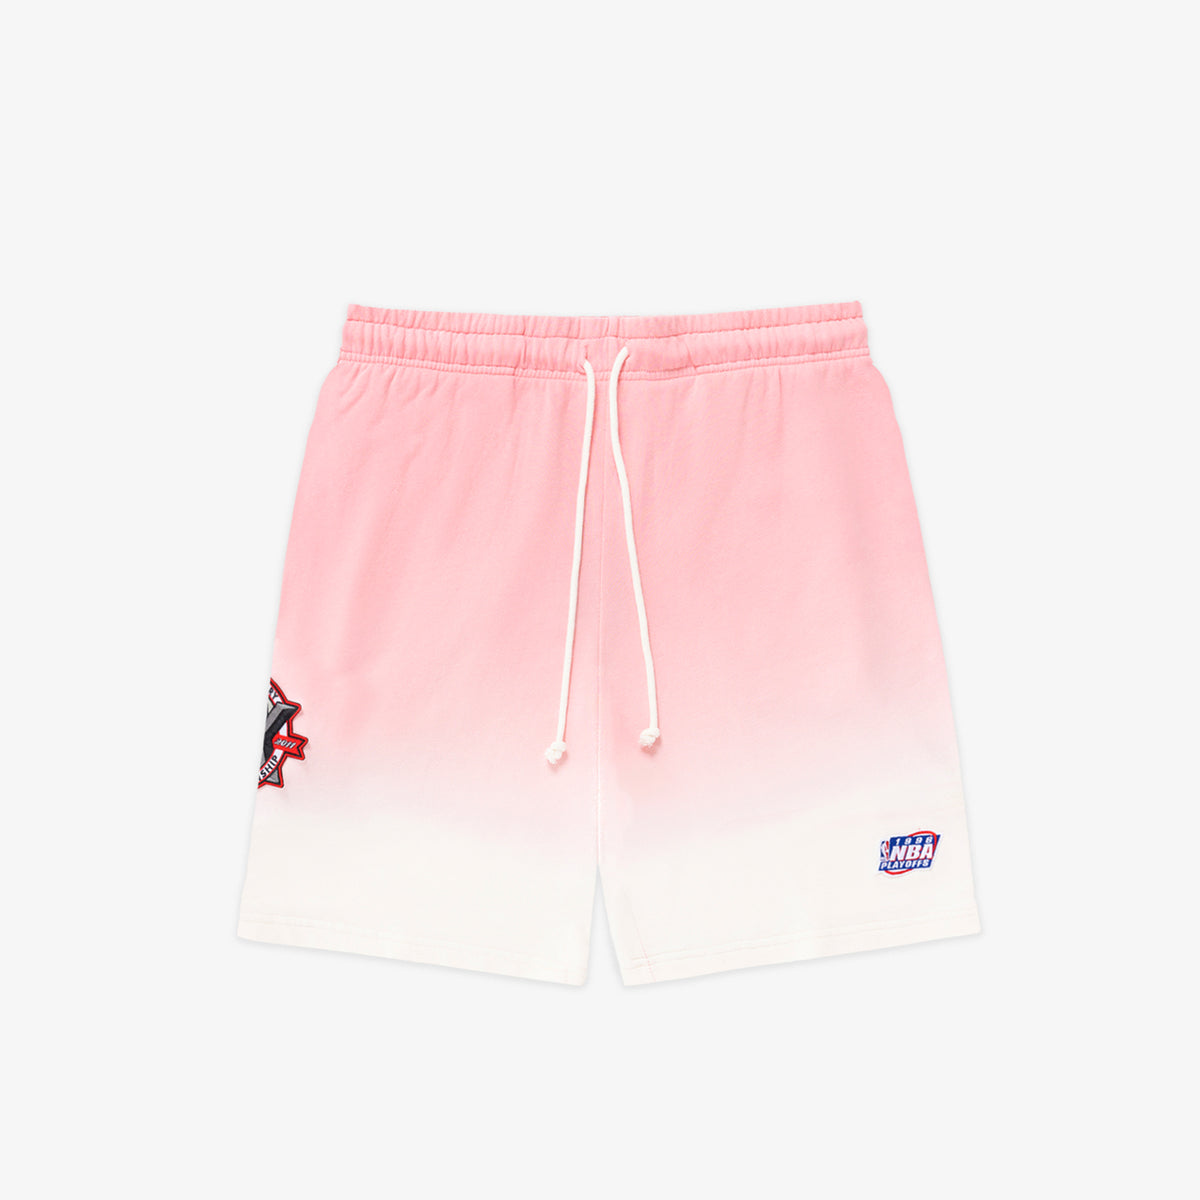 Chicago Bulls Run It Shorts - Pink/Worn White